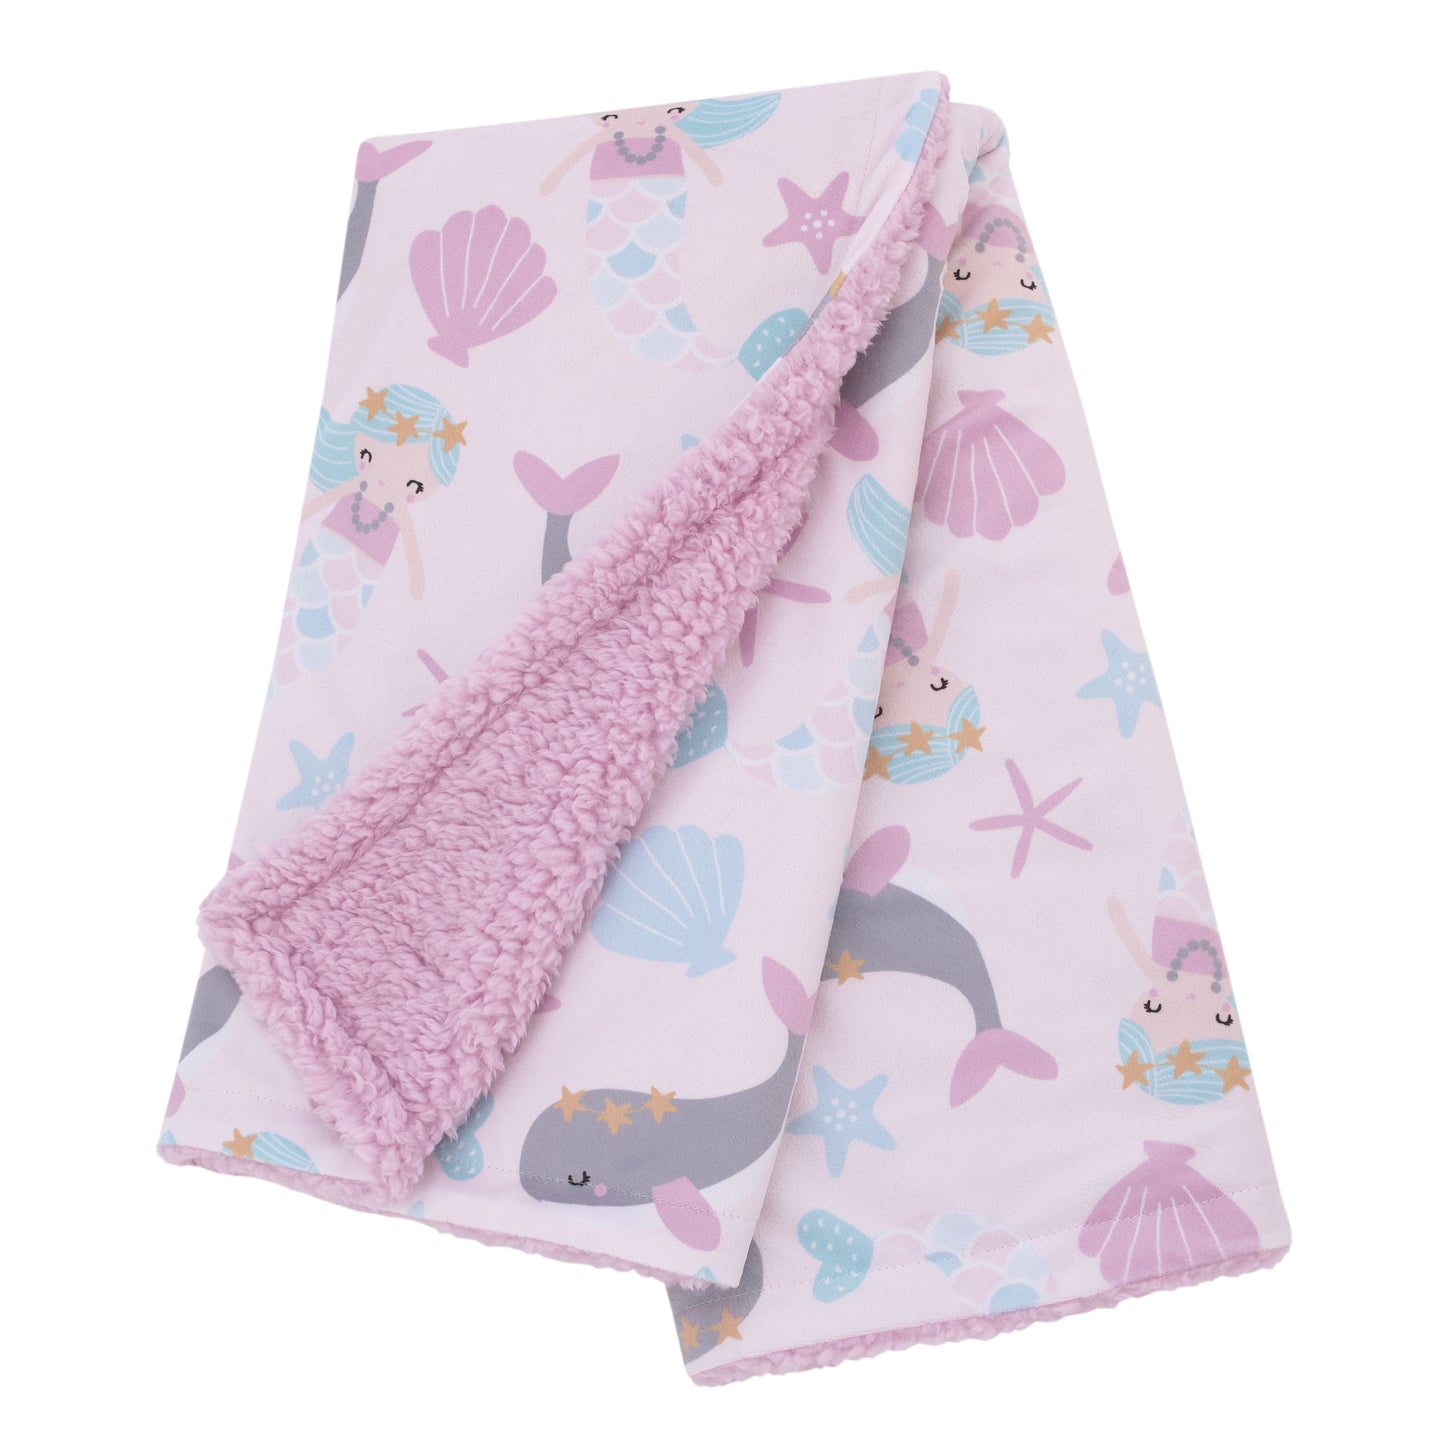 NoJo Sugar Reef Mermaid Pink, Aqua, Gray Super Soft Sherpa Baby Blanket